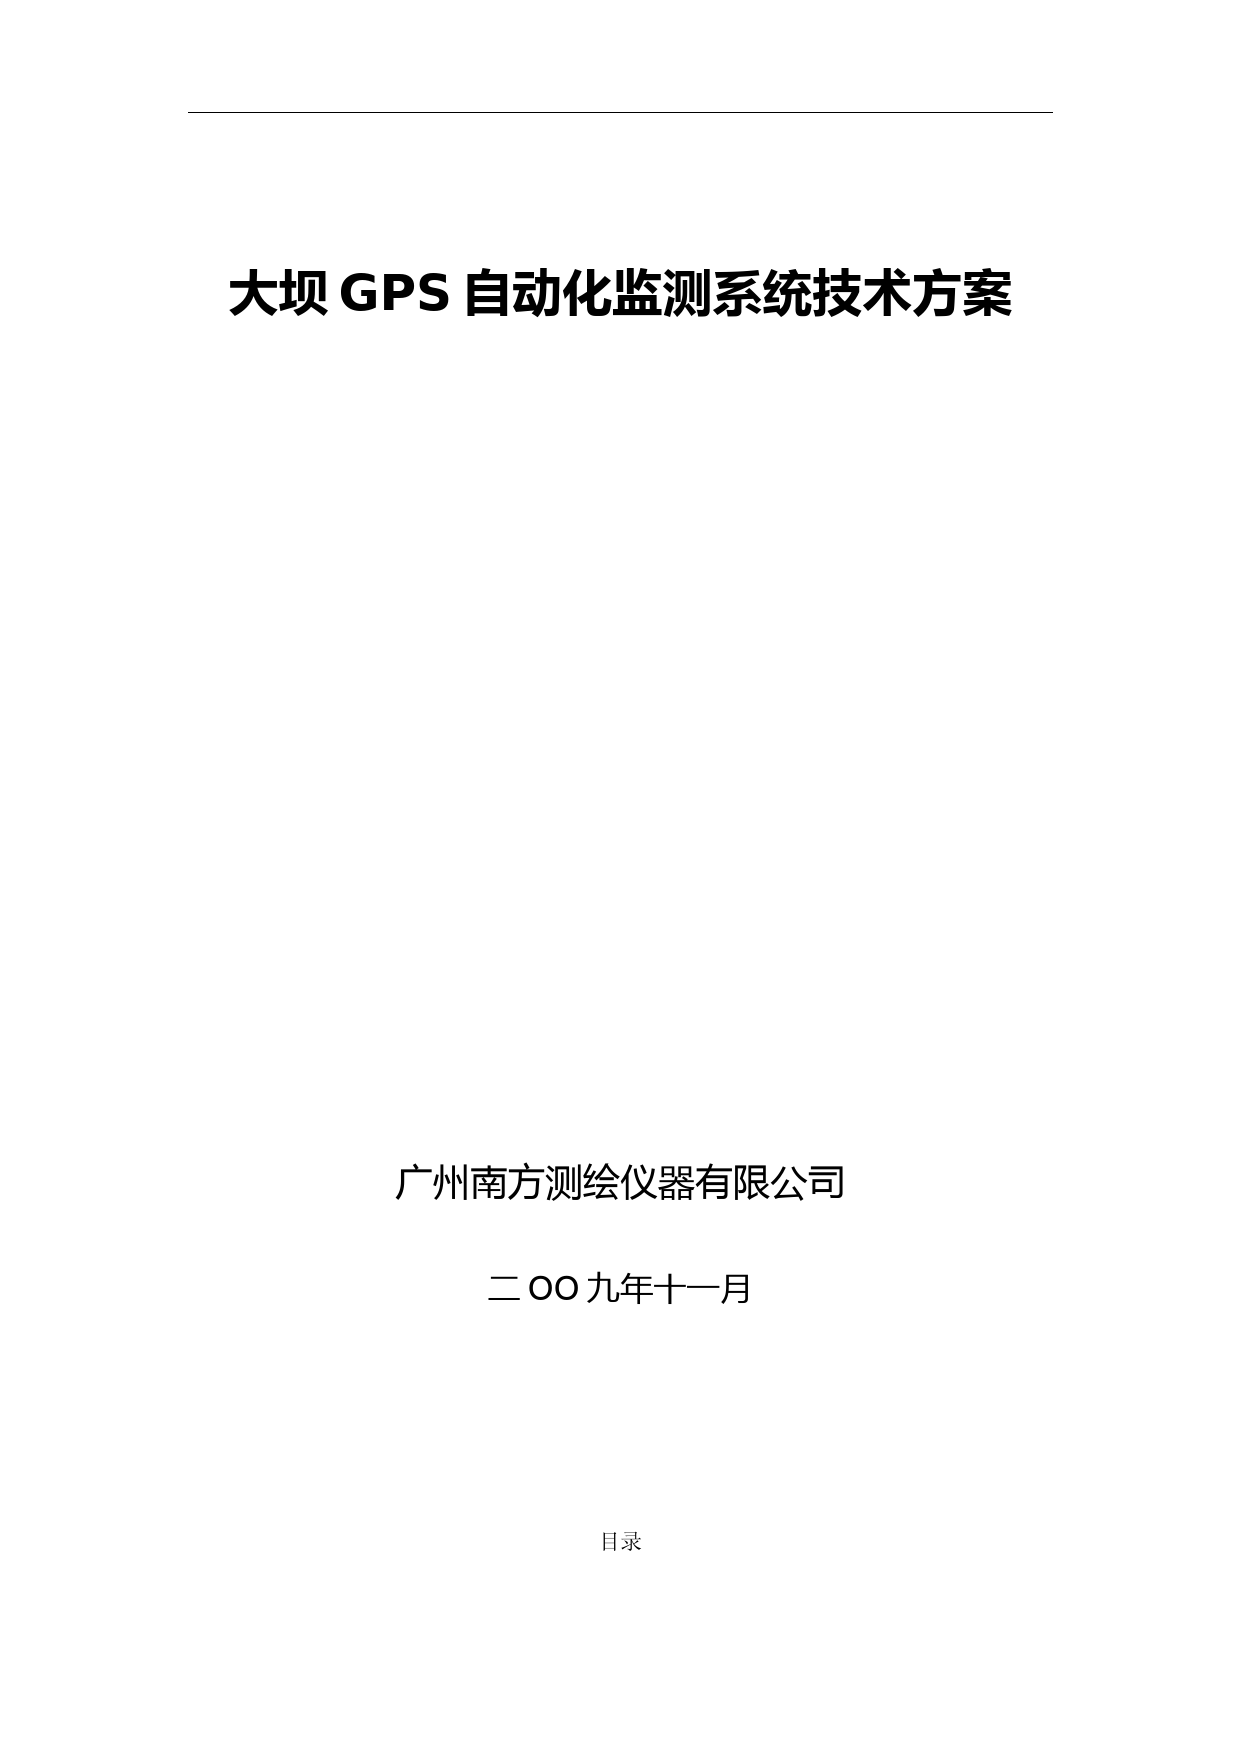 GPS自动化变形监测系统方案